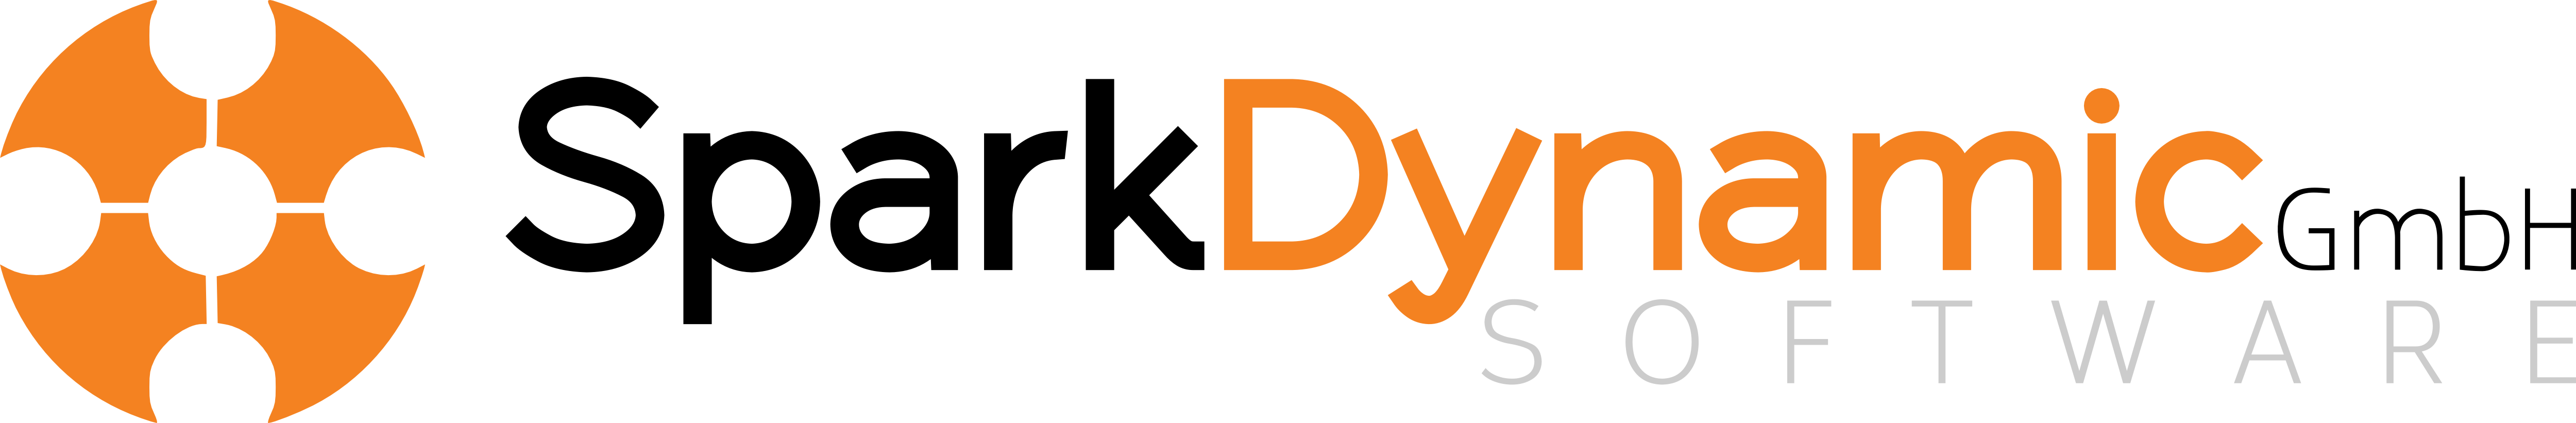 SparkDynamic GmbH Logo